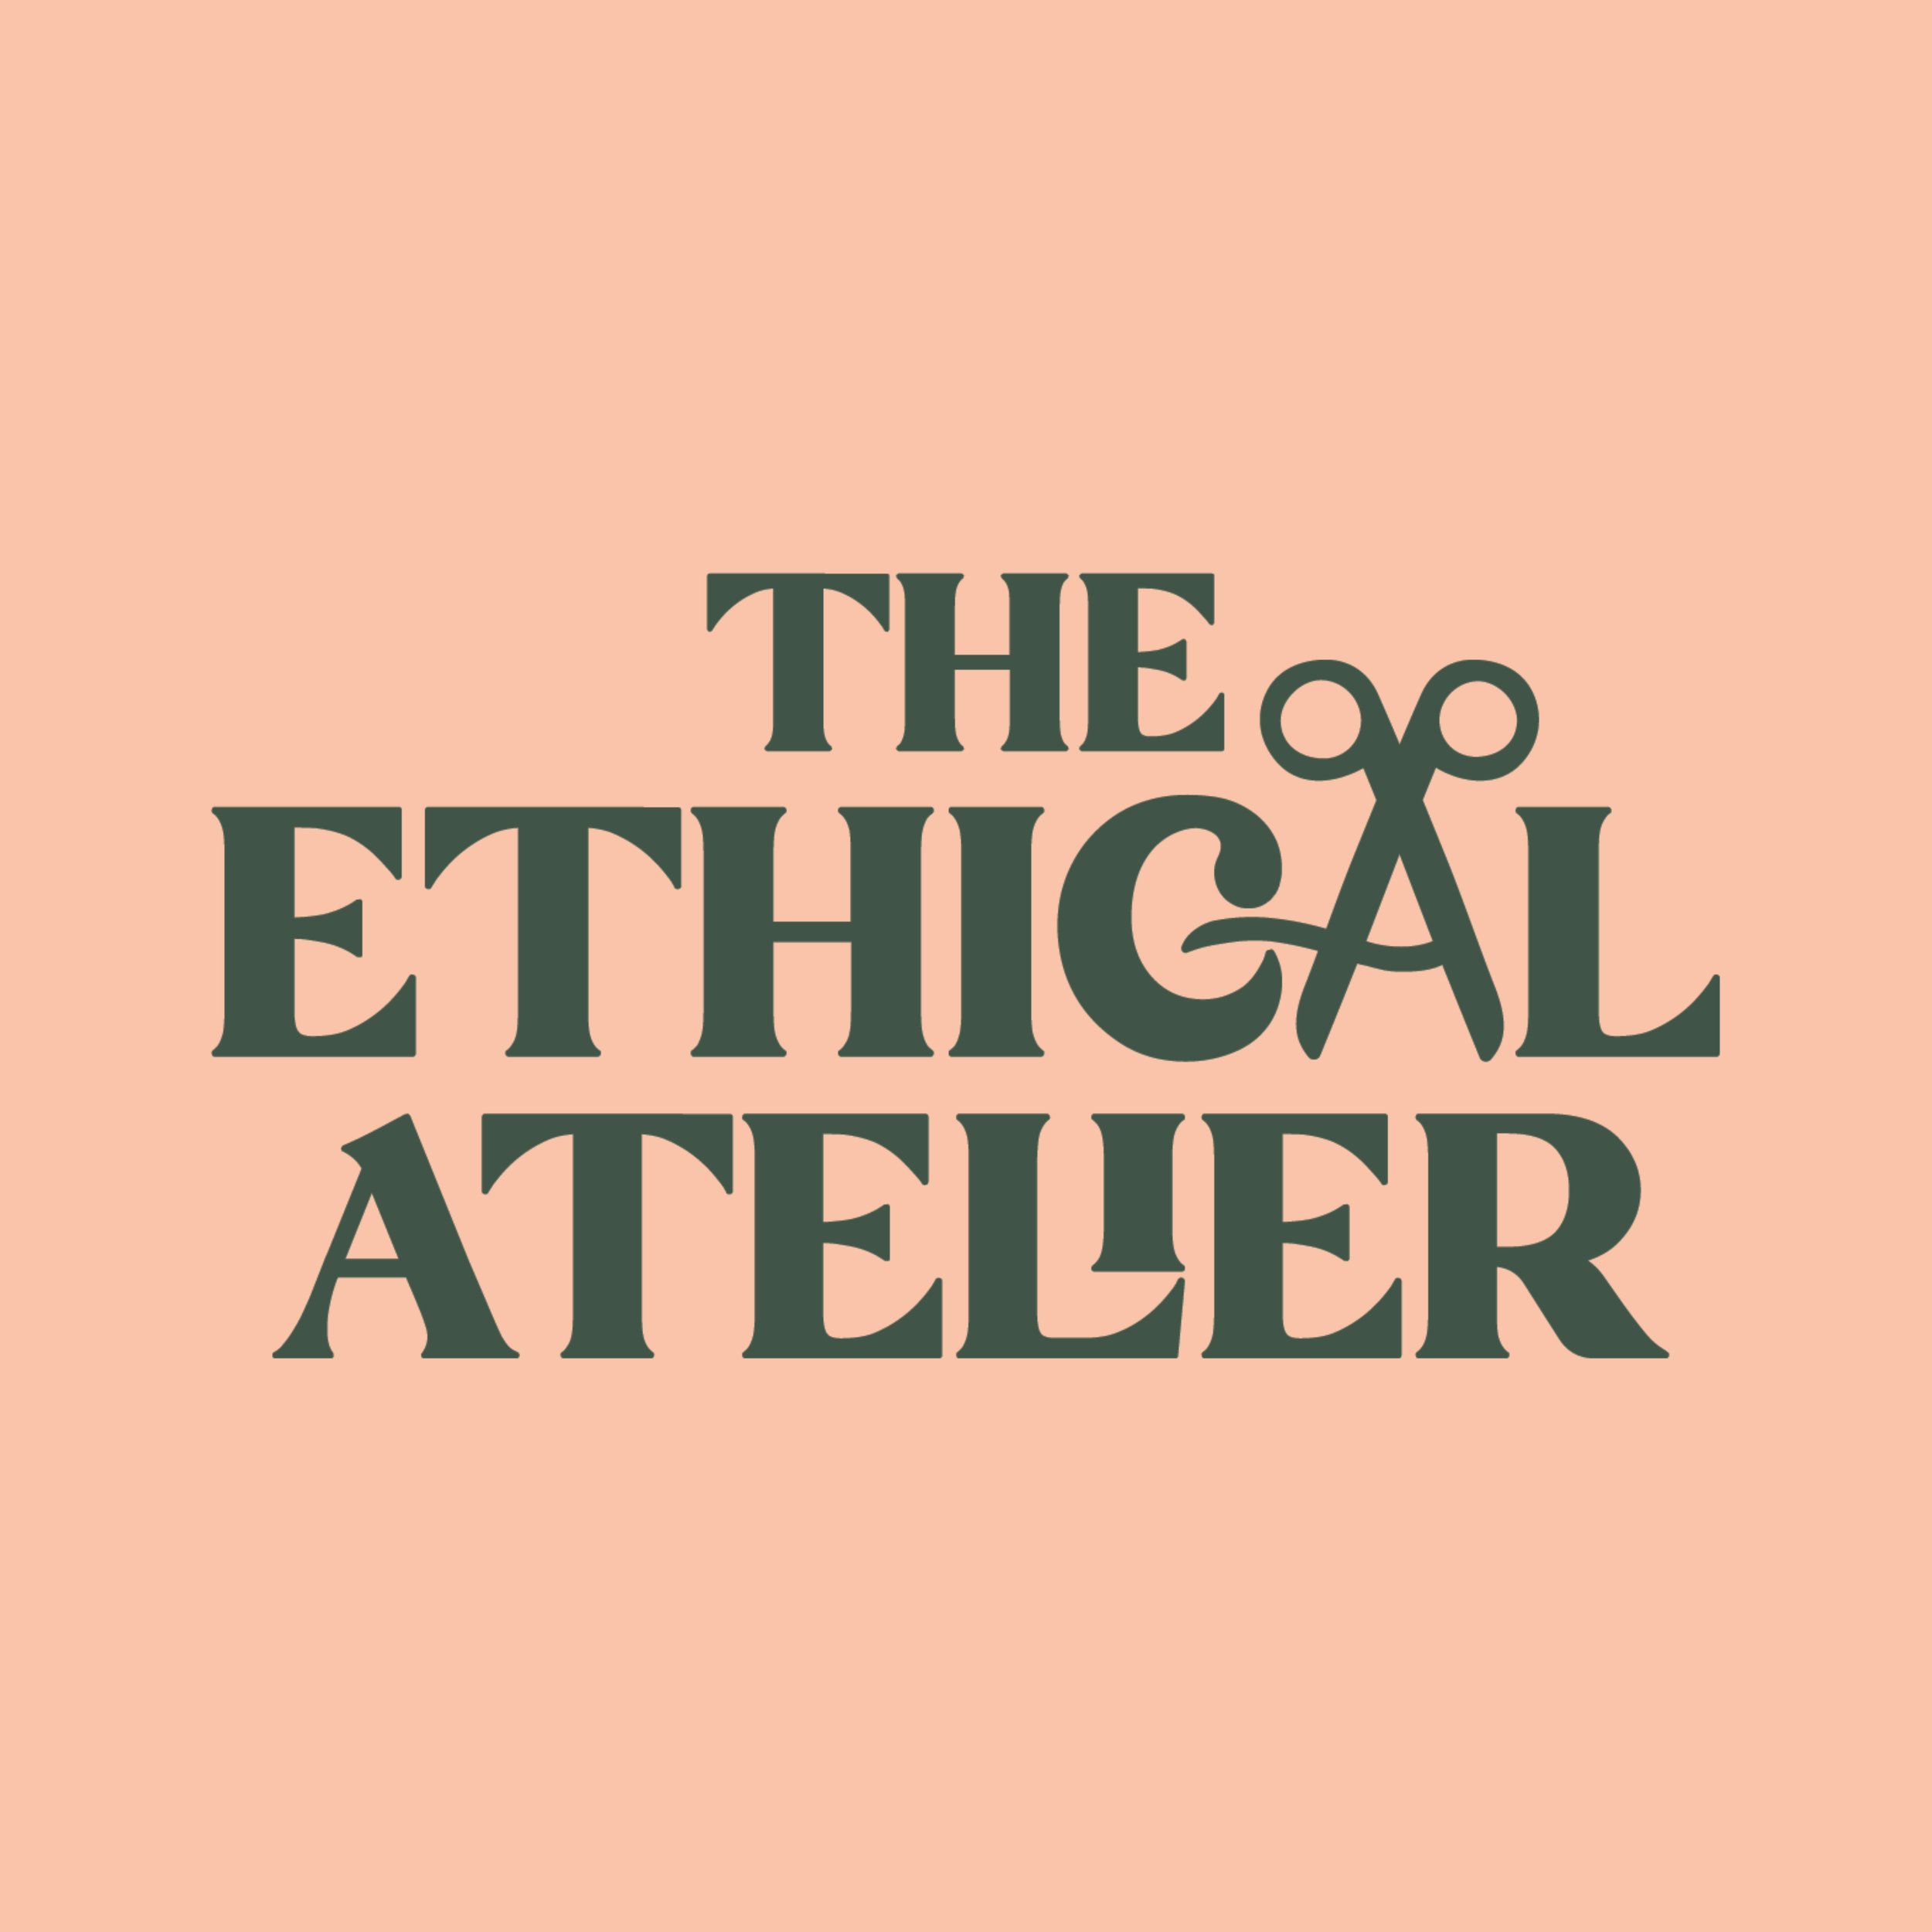 Ethical Atelier- Instagram green text sq.jpg